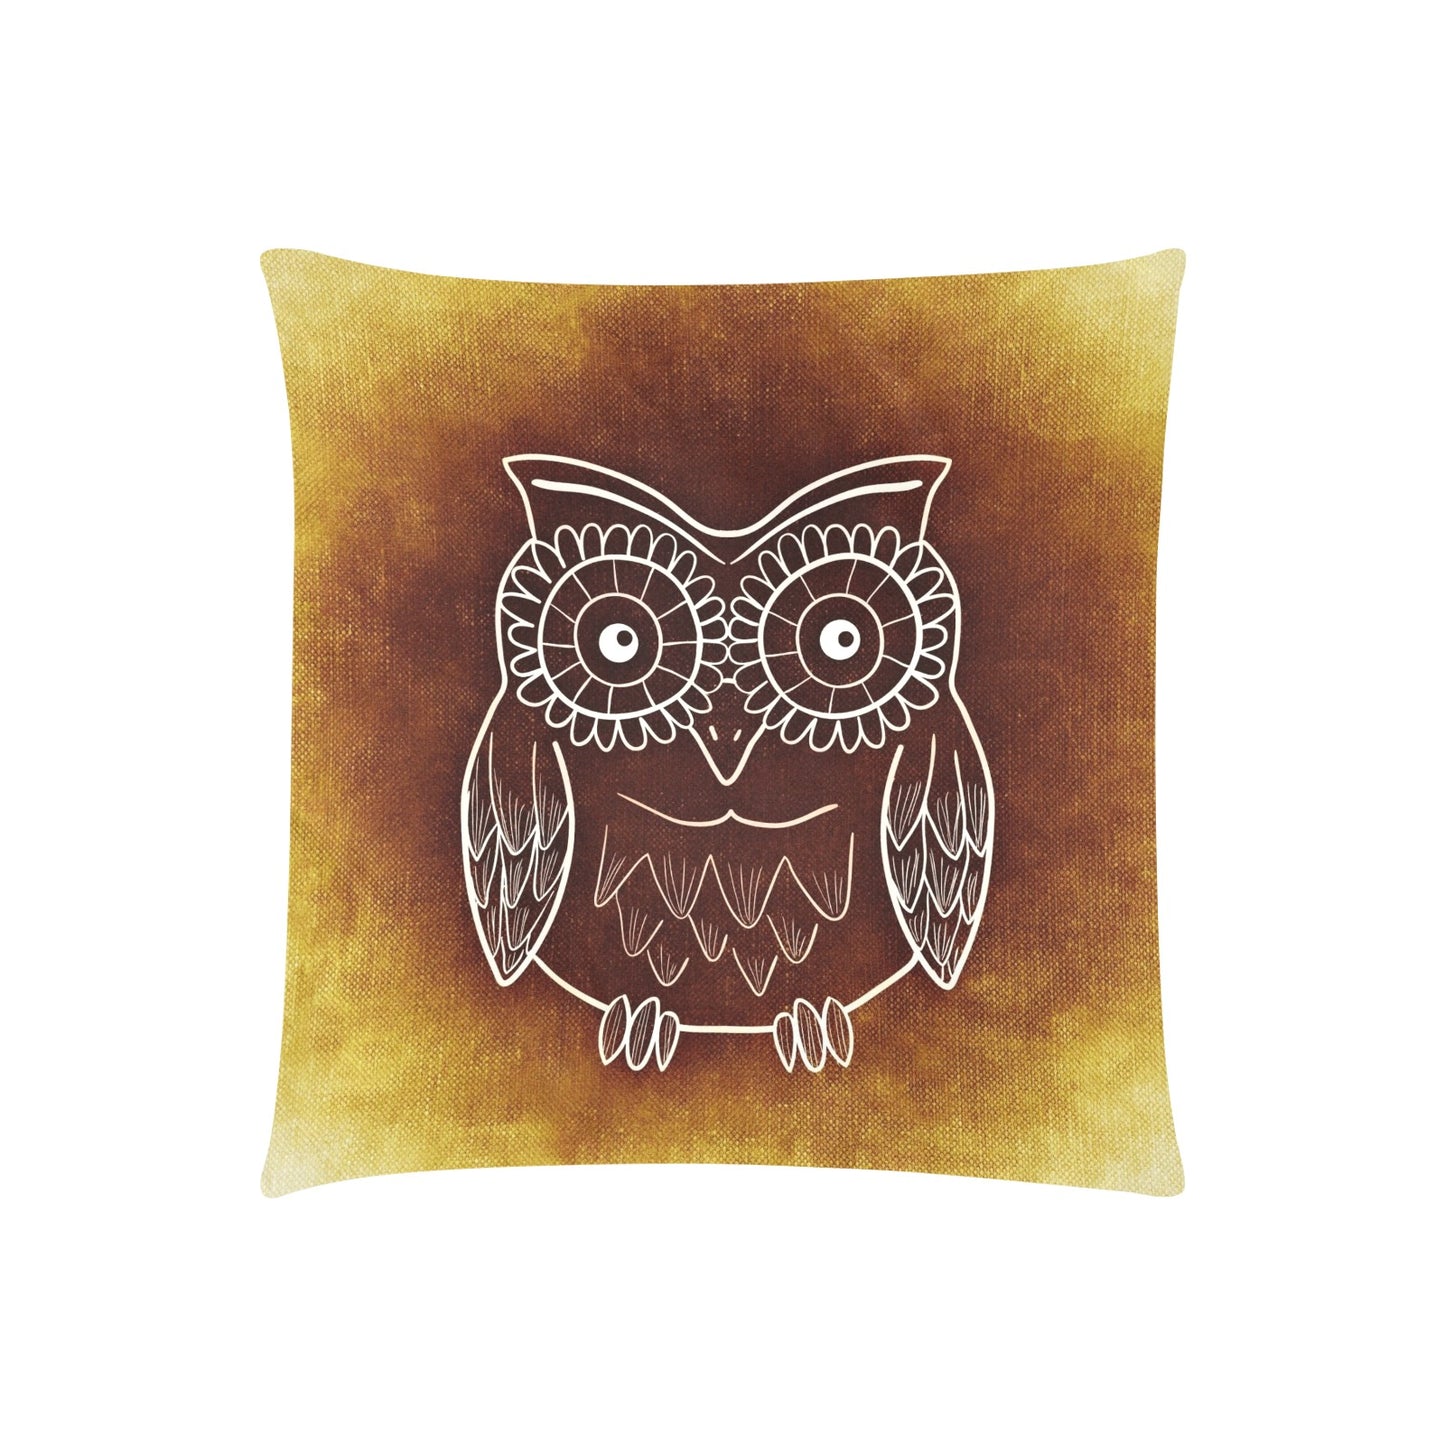 Owl Zippered Cushion Cover 20"x20" - Pillow Case - Zanlana Design and Home Decor